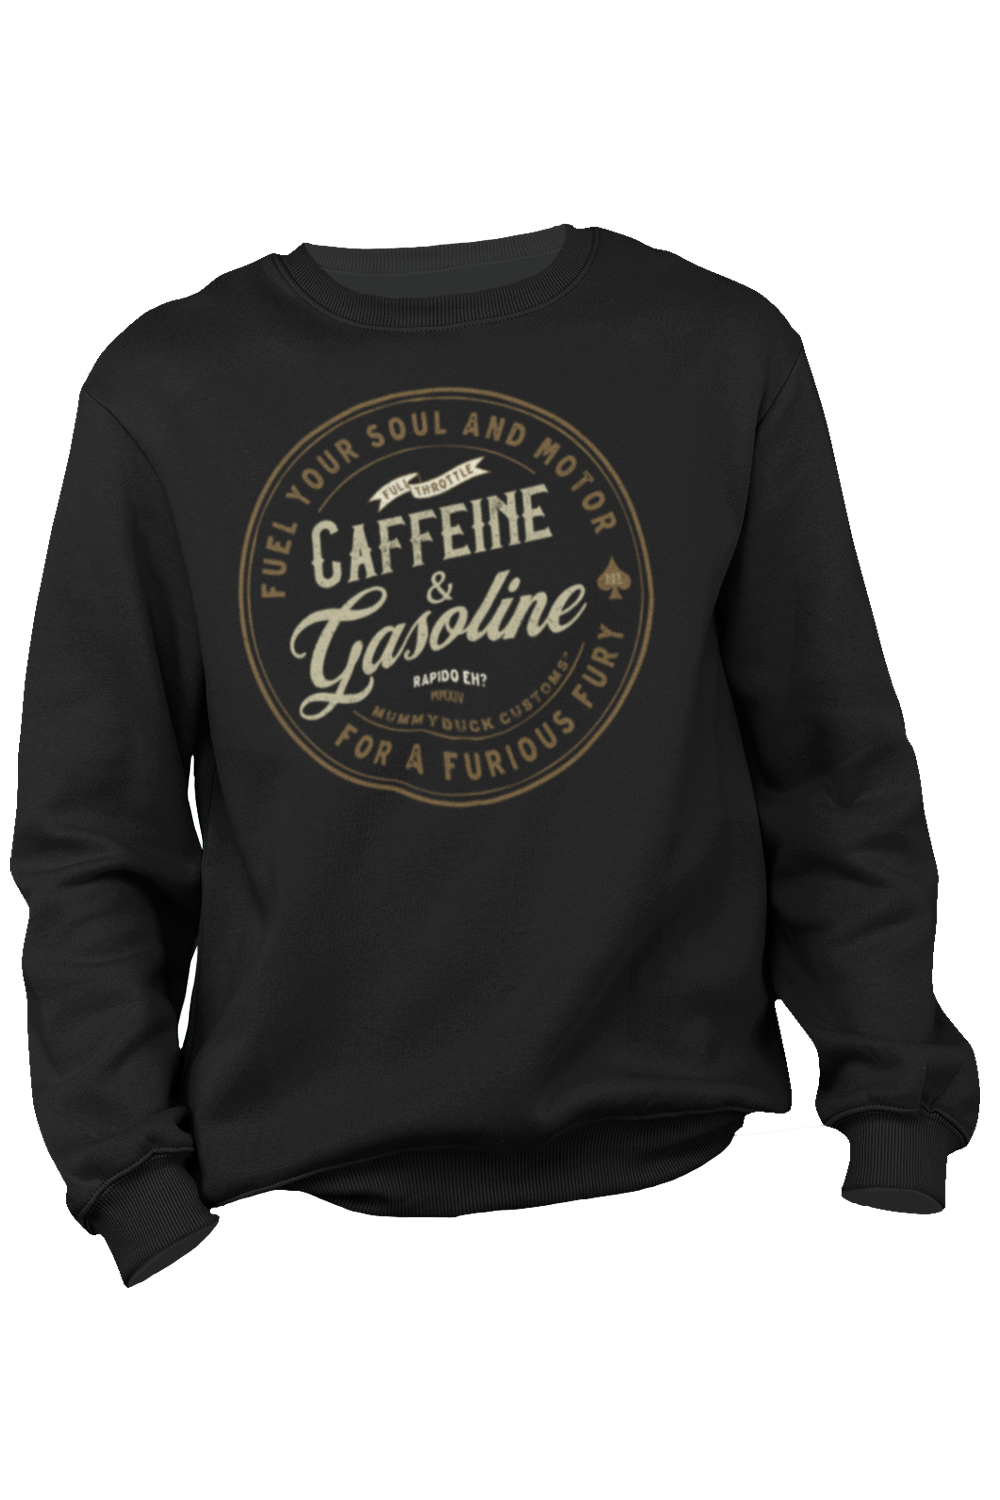 Caffeine and gasoline motorcycle sweatshirt